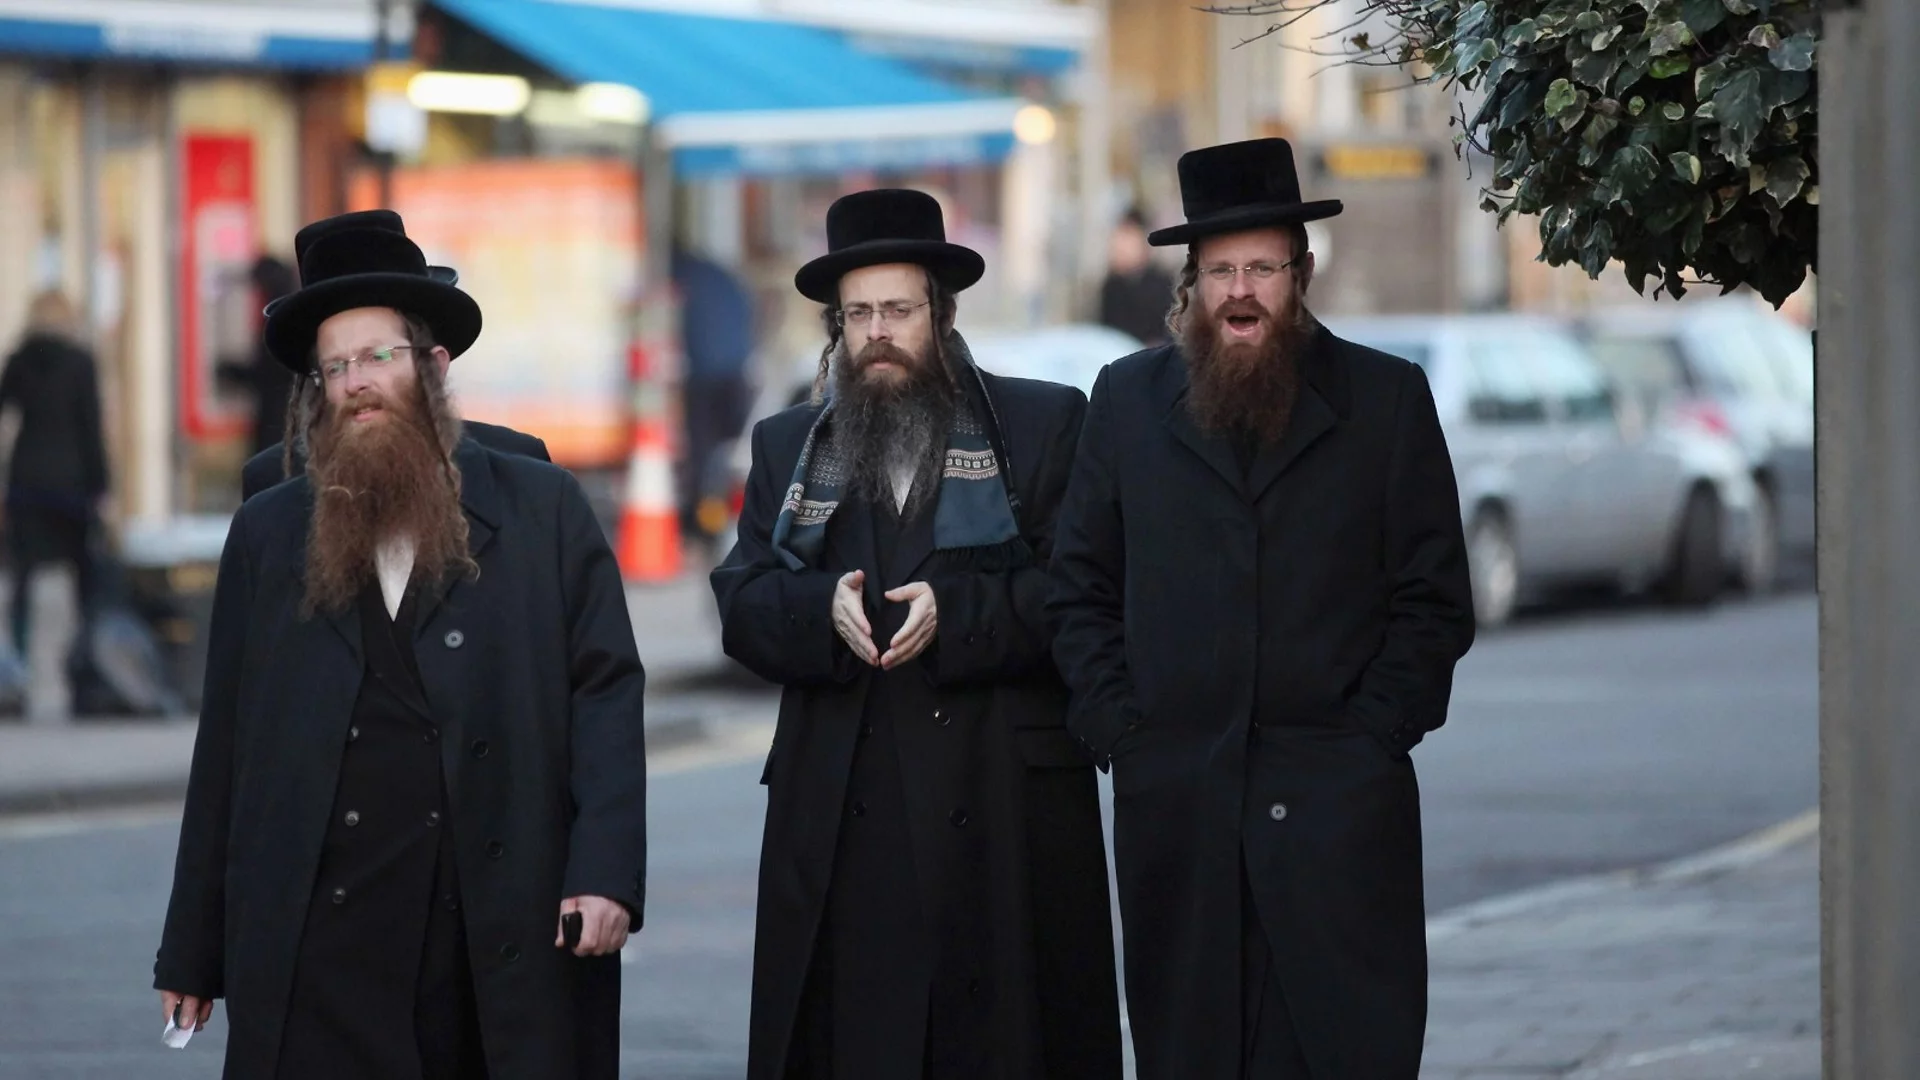 Протест на ортодоксални евреи в Израел заради наборната служба (ВИДЕО)